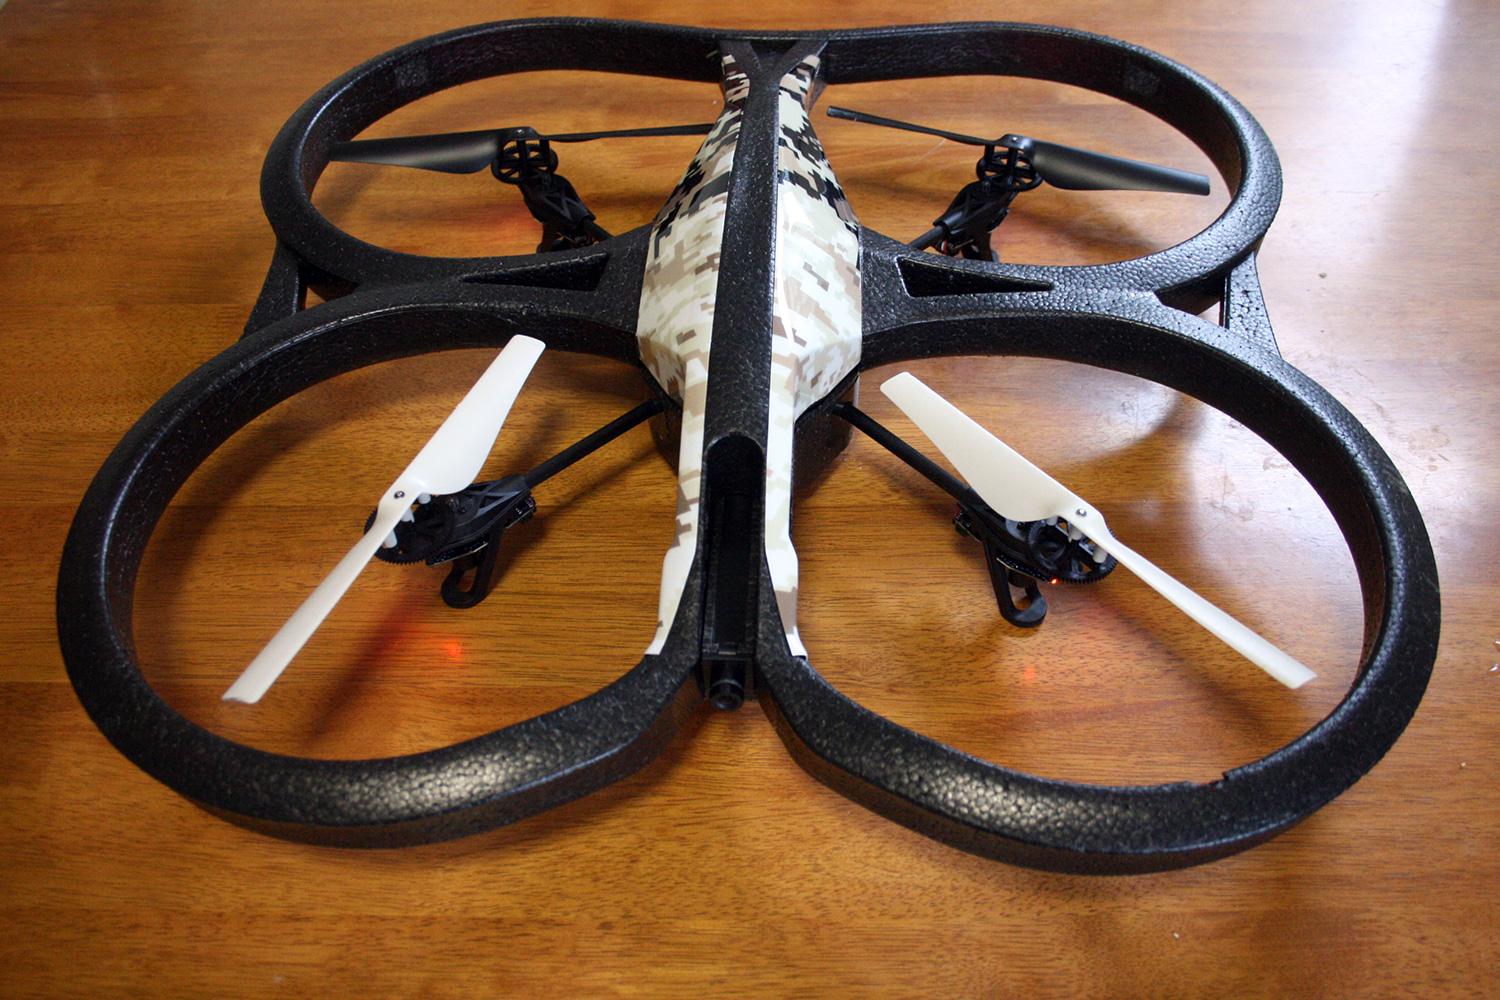 AR.Drone 2.0 Elite Edition Review | Digital Trends